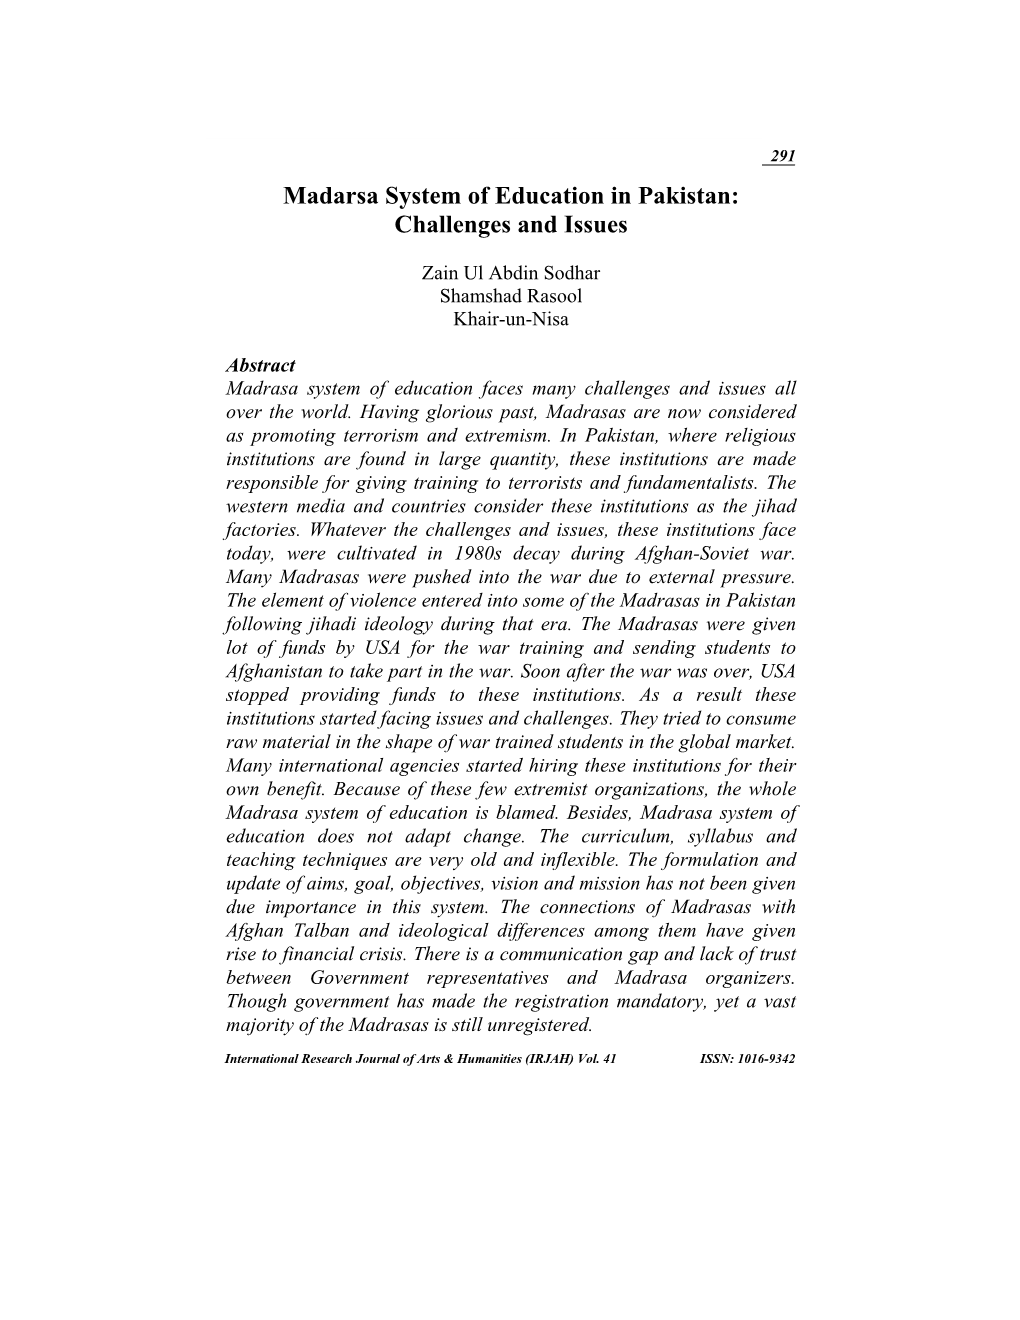 Madarsa System of Education in Pakistan: Challenges and Issues 291 Madarsa System of Education in Pakistan: Challenges and Issues